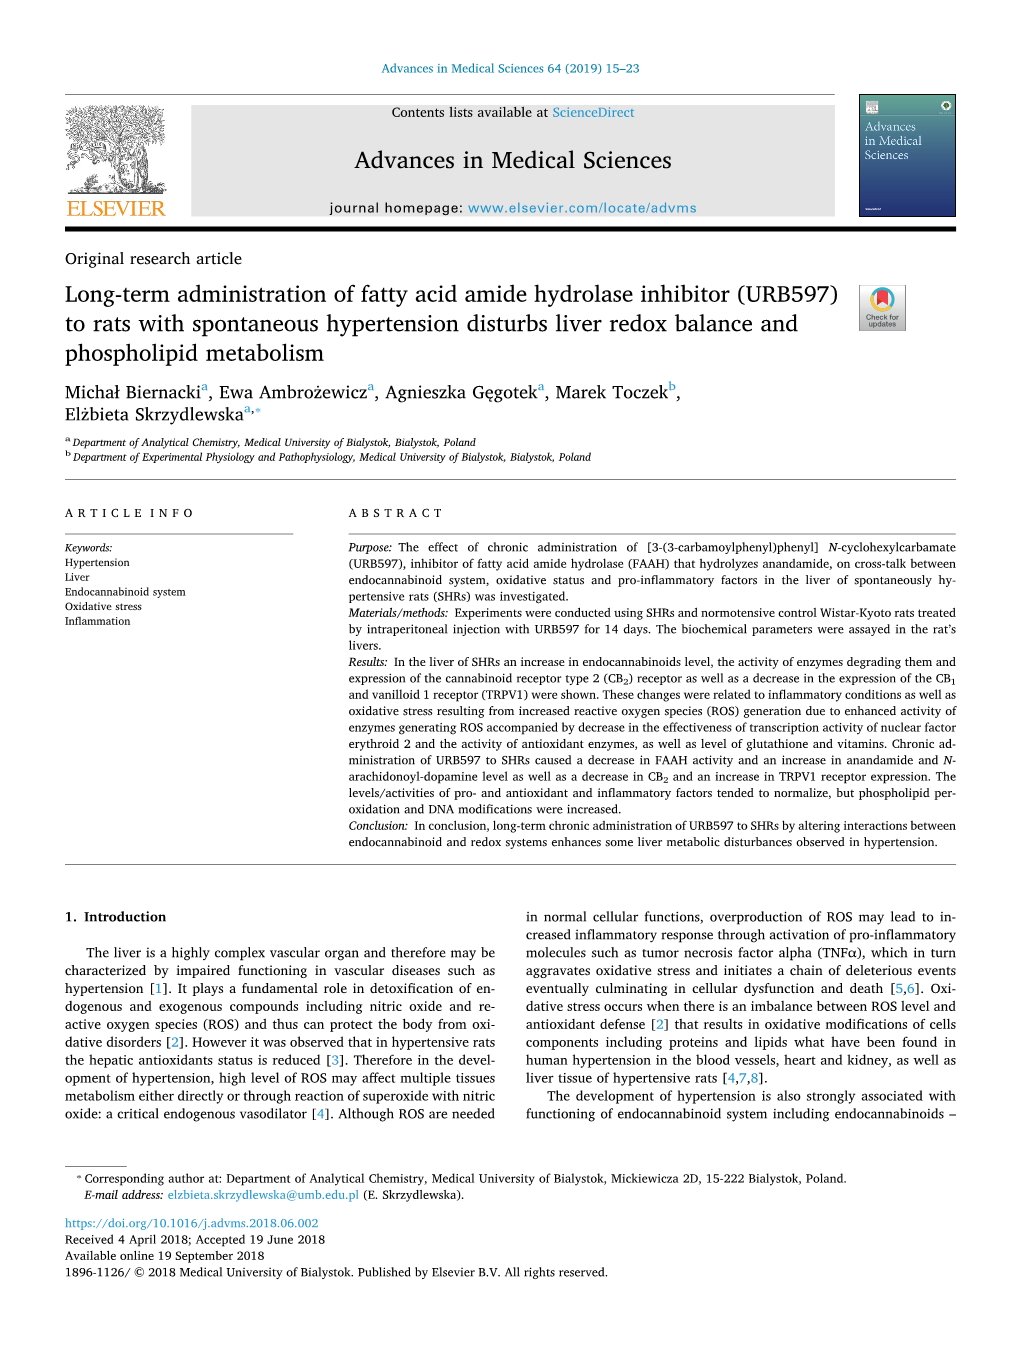 Long-Term Administration of Fatty Acid Amide Hydrolase Inhibitor (URB597